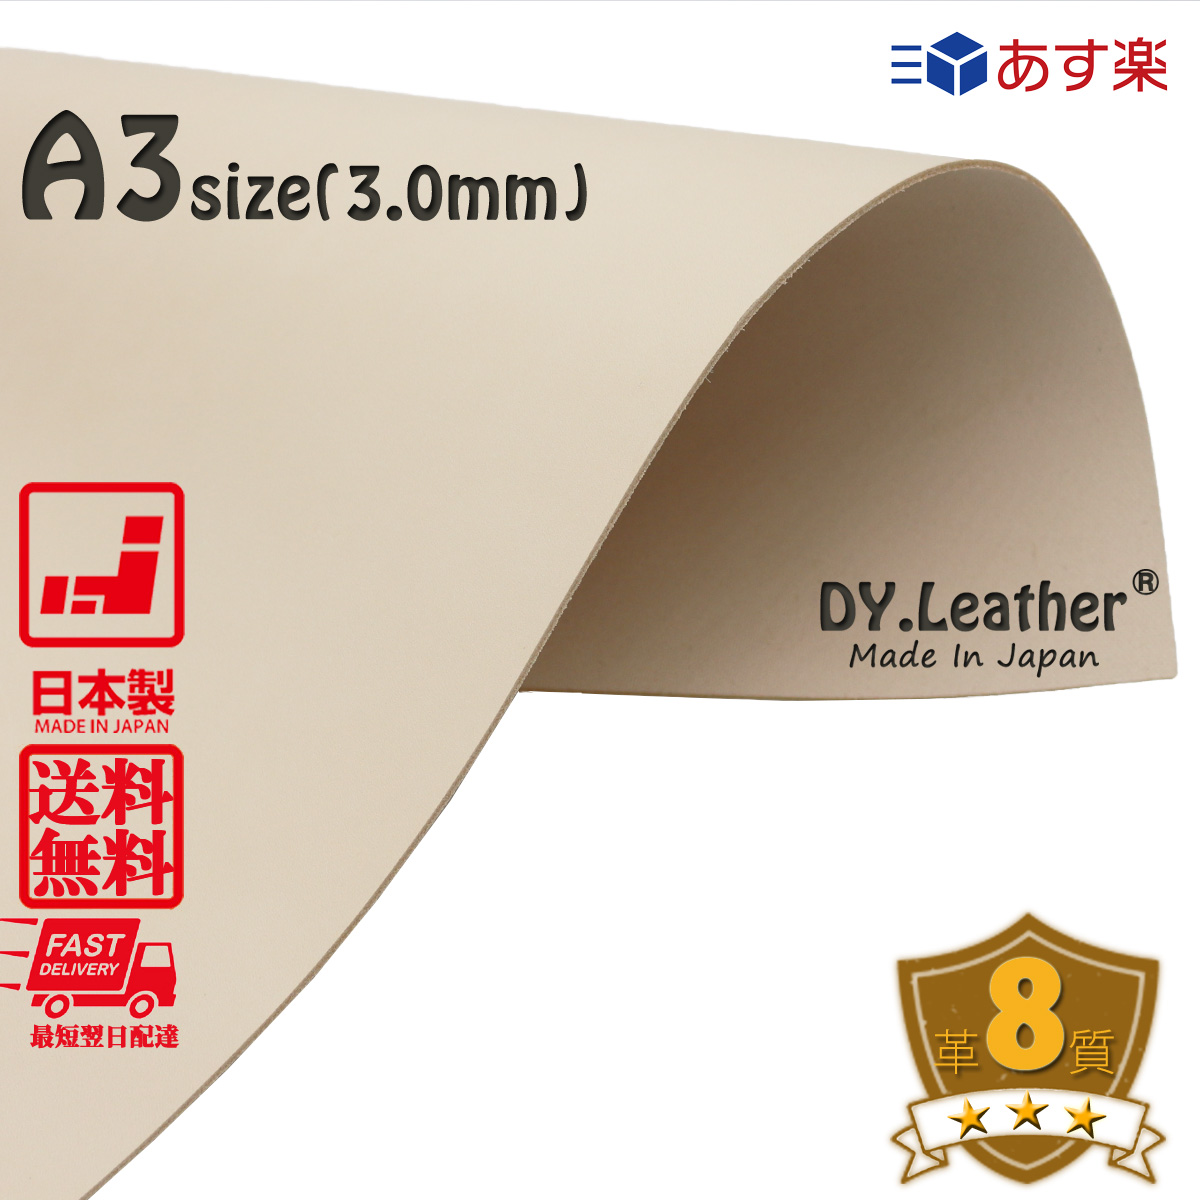 DY.Leather �帥�������������若���������������� ��� �����������祉���ALE鐚�FF ������������完綏����� ������ラ� ����≧� 紊����� A3size �ユ�茖�2020 �遺� 3.0mm�������羲����轡 ��蟹8